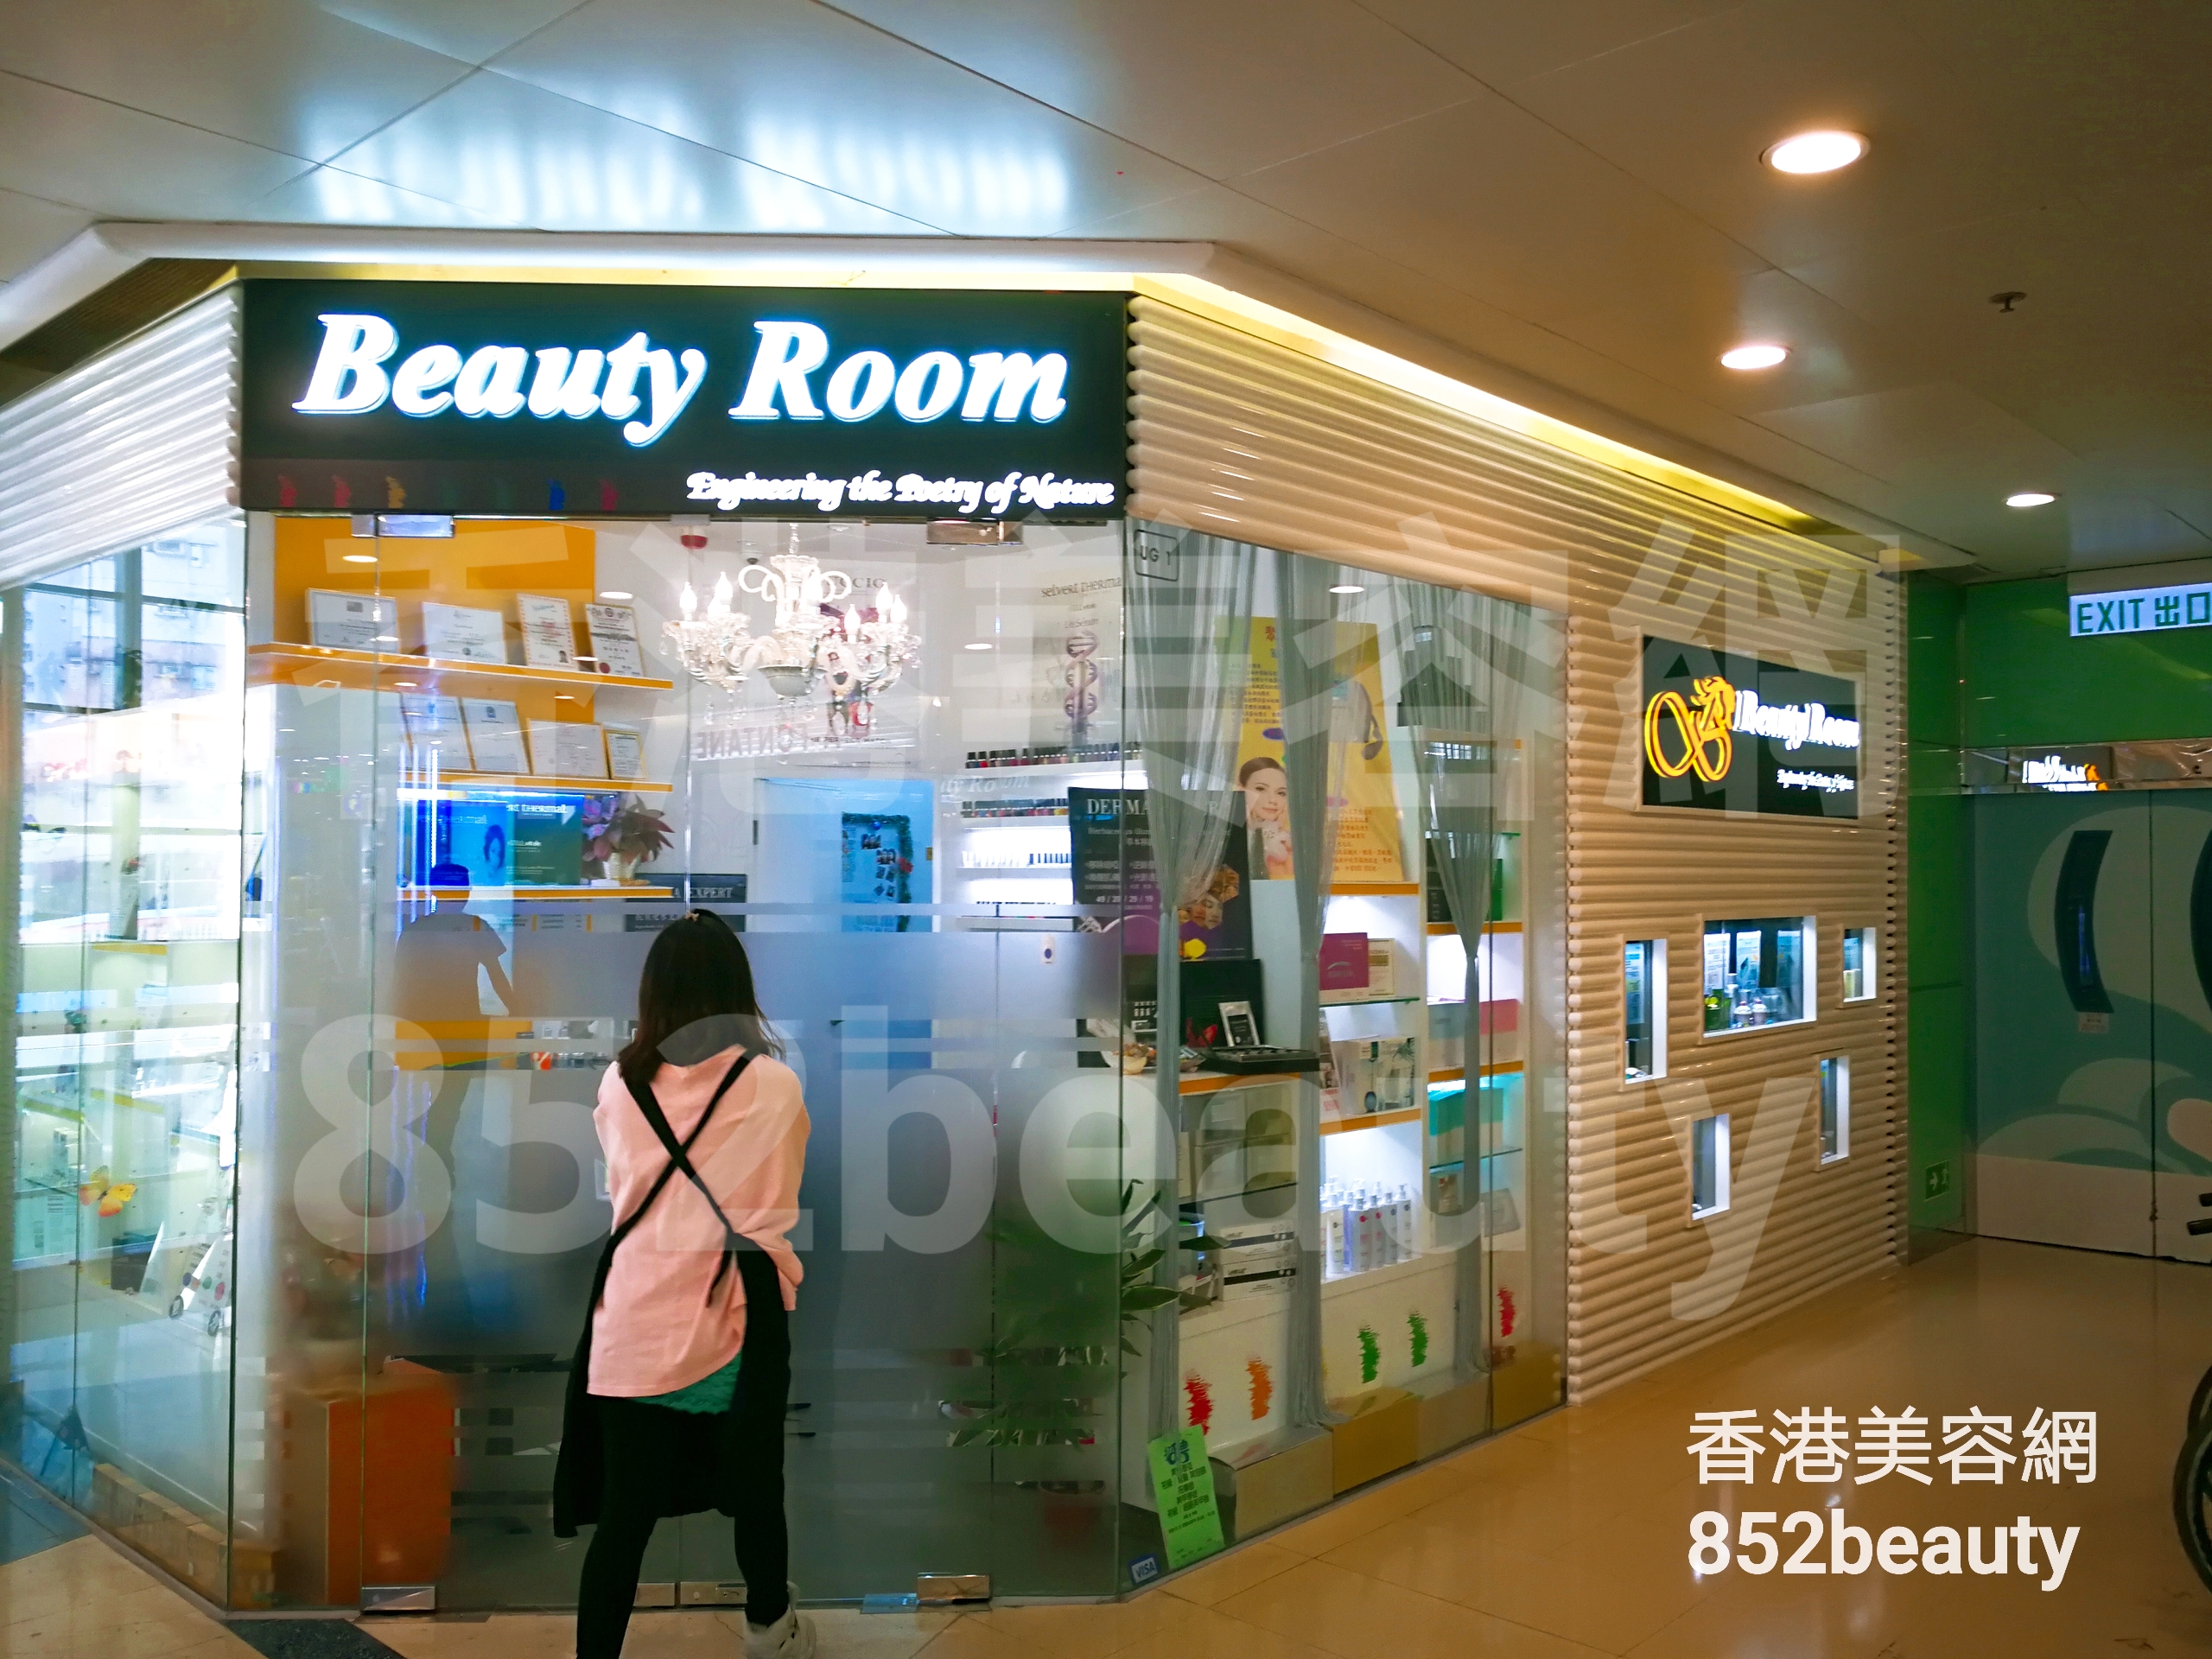 香港美容網 Hong Kong Beauty Salon 美容院 / 美容師: Beauty Room